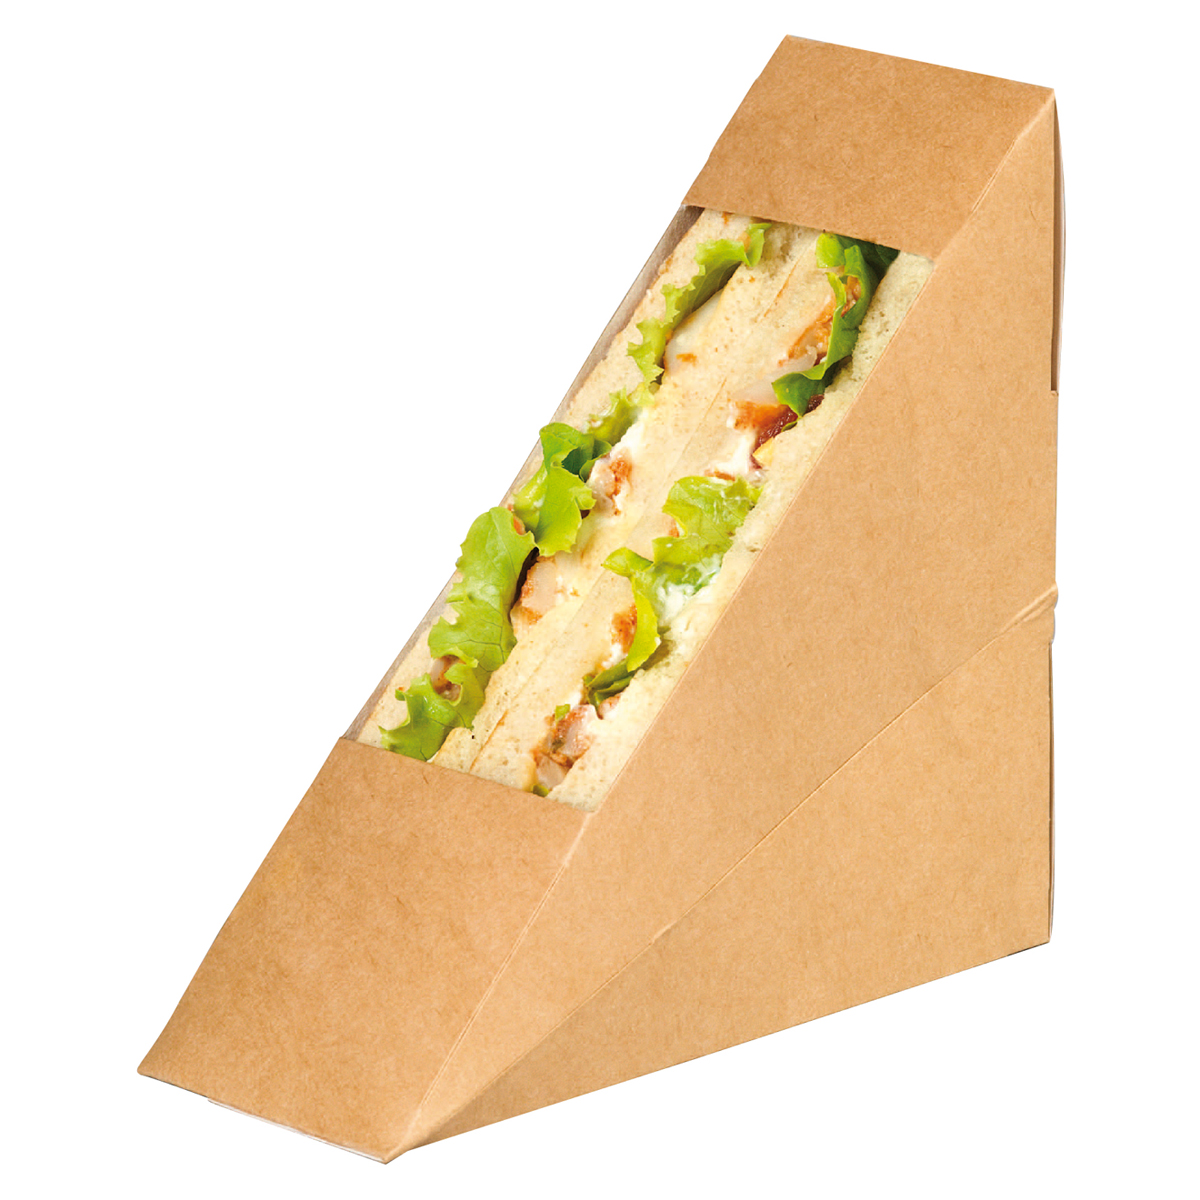 Packnwood Kraft Double Sandwich Box with Window, 4.8" x 2" x 4.8", Case of 500